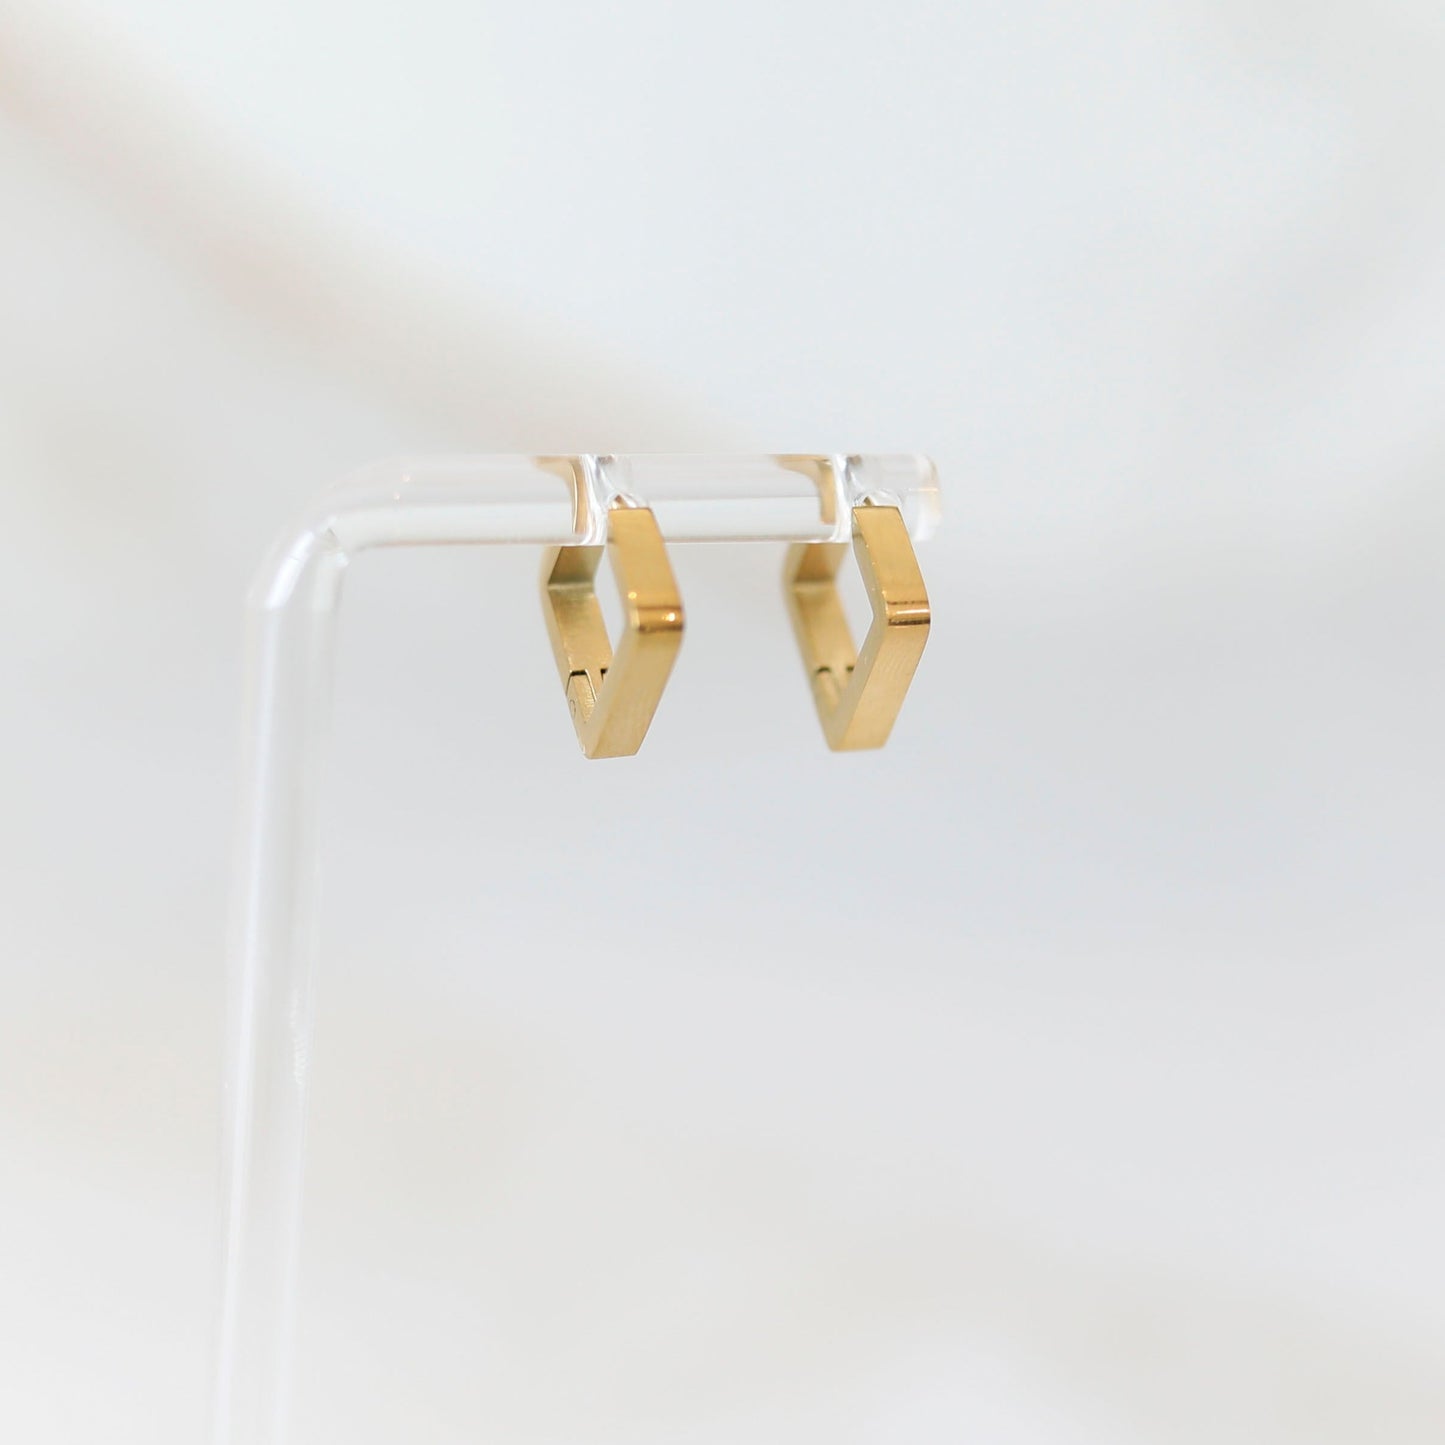 Basic Geometric Hoop Earrings in the Diamond shape